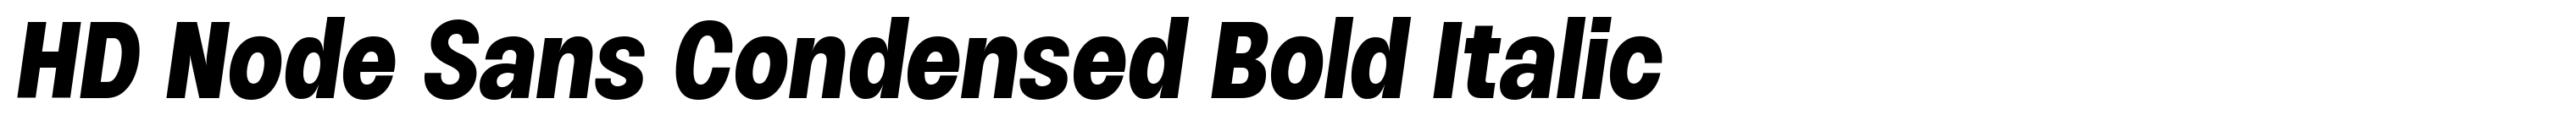 HD Node Sans Condensed Bold Italic